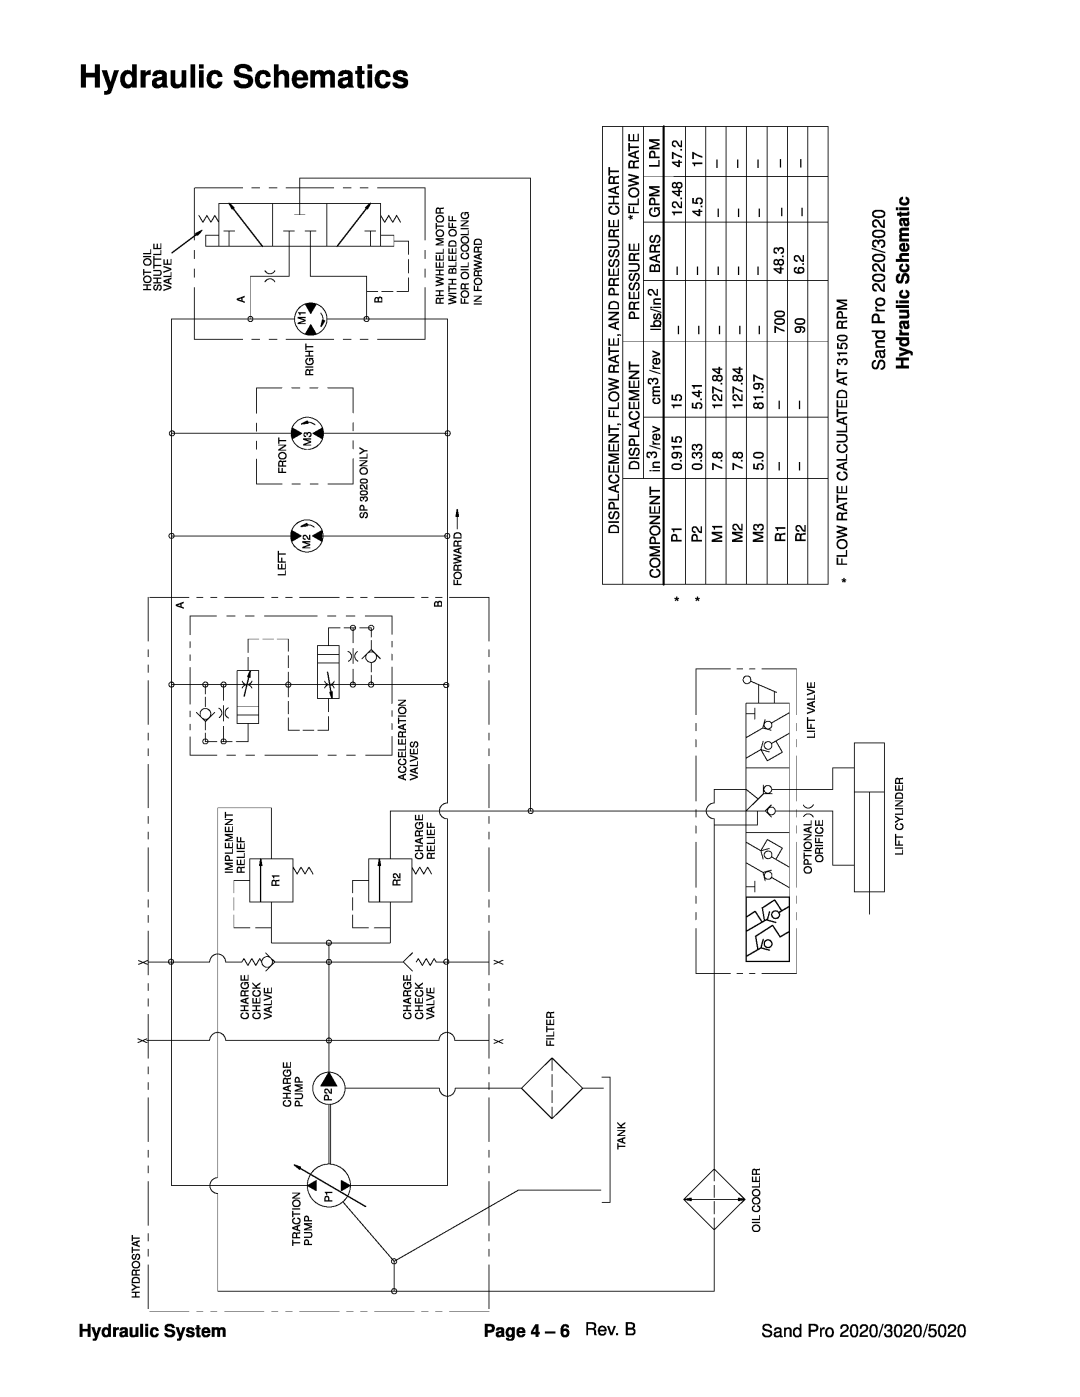 Toro 3020, 5020, 2020 service manual Hydraulic Schematic, Page 